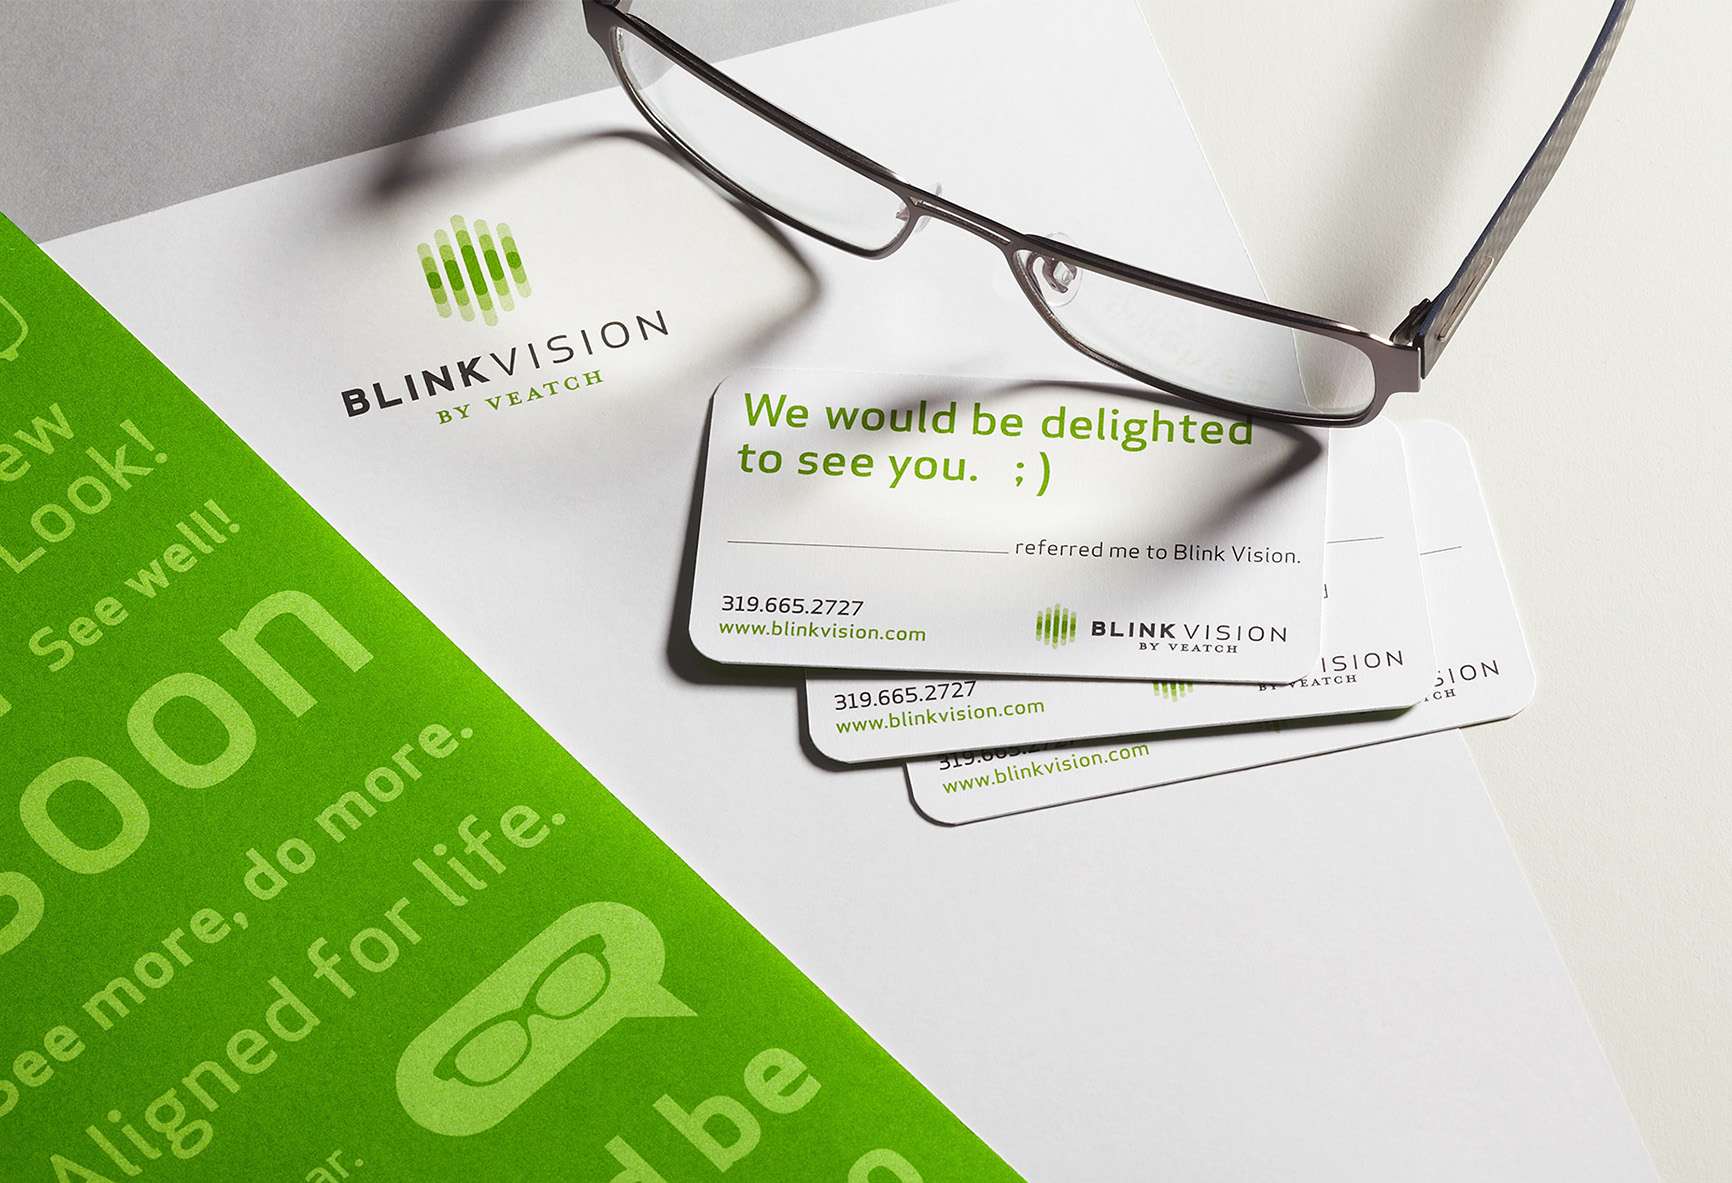 Blink Vision business cards